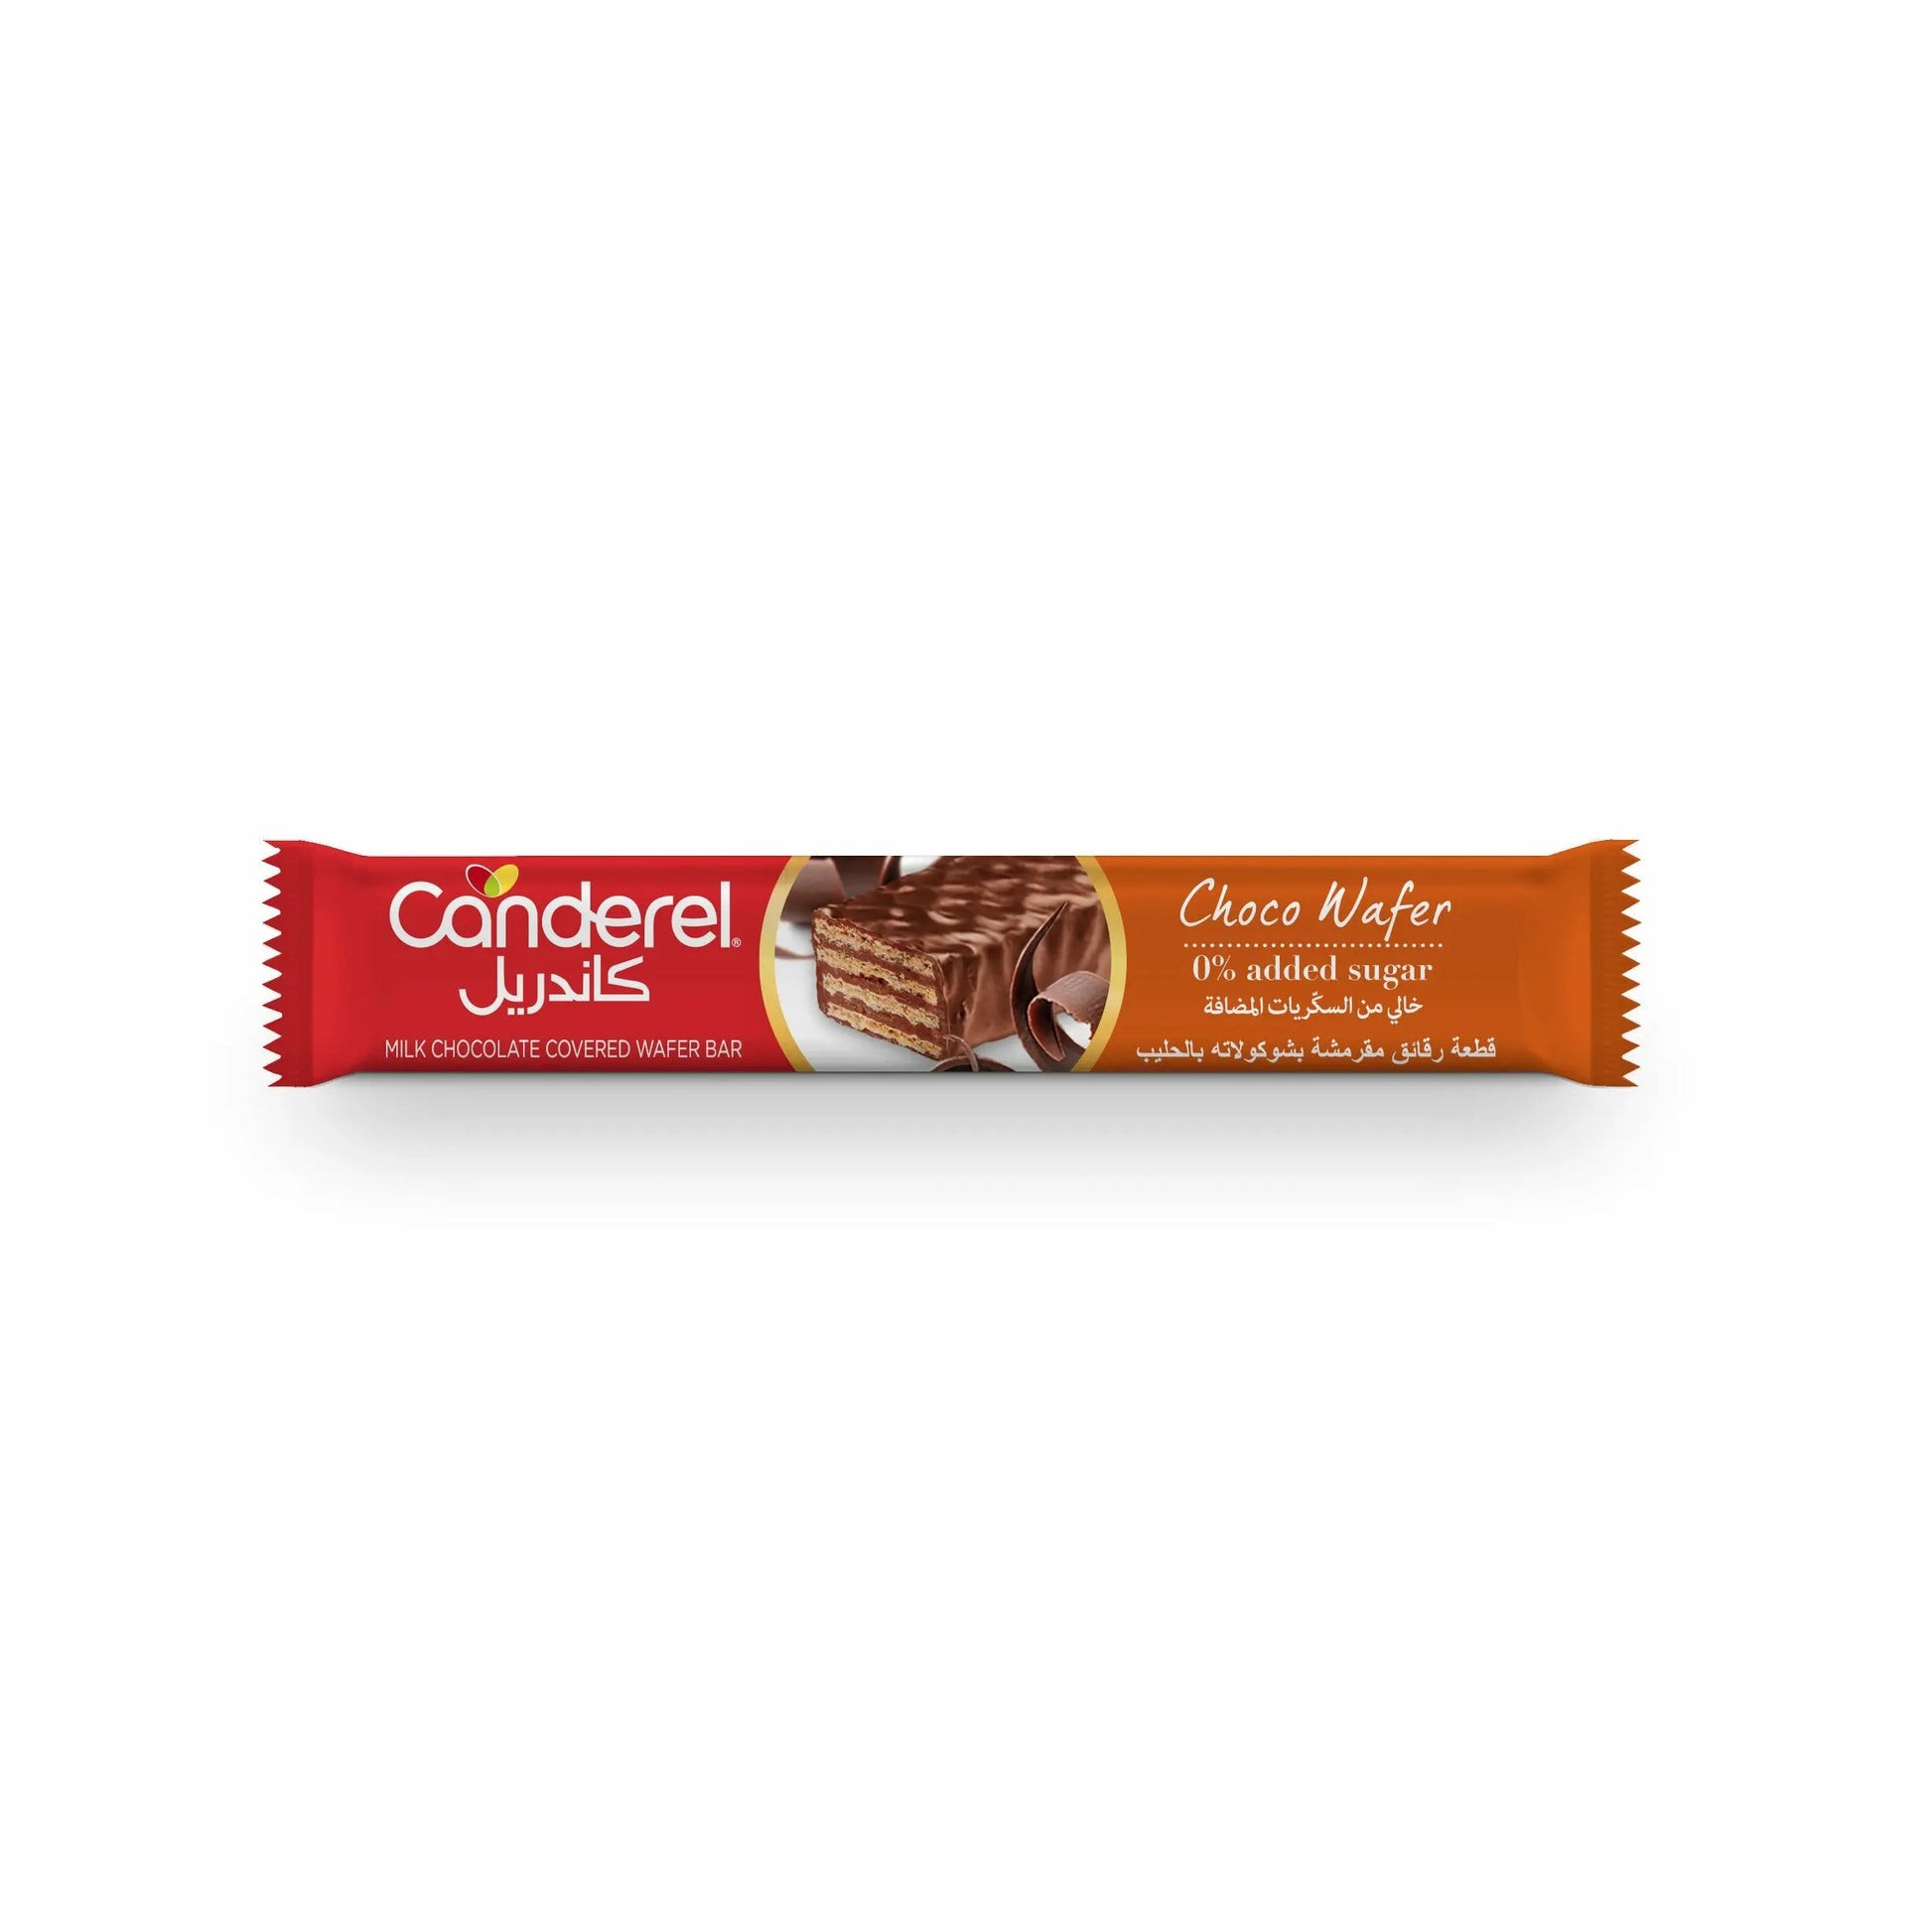 Canderel Choco Wafer - 30g Canderel